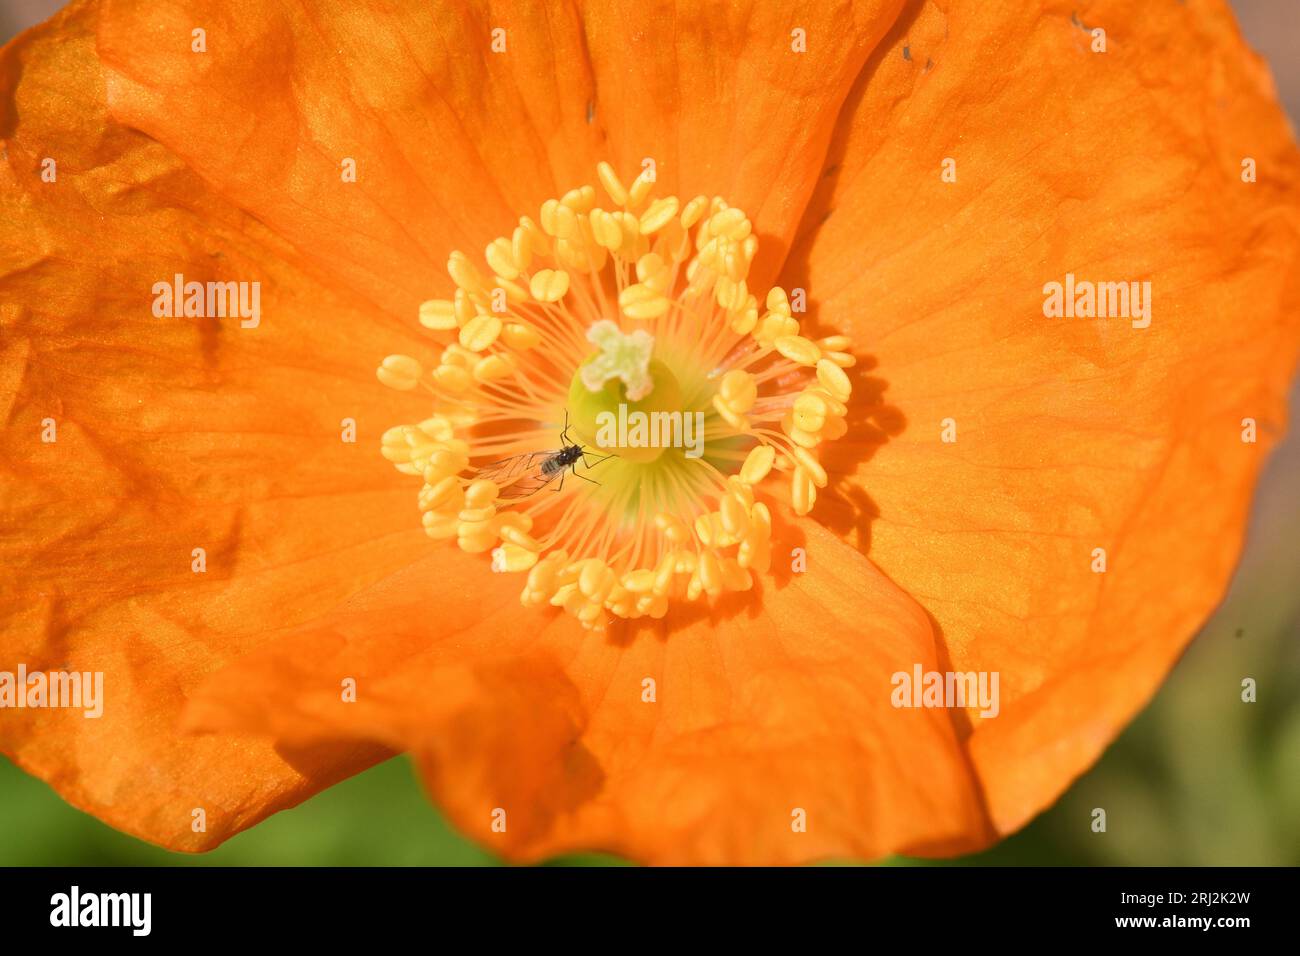 Orange Welsh Poppy "Meconopsis cambrica aurantiaca" impollinata da una piccola mosca. Foto Stock